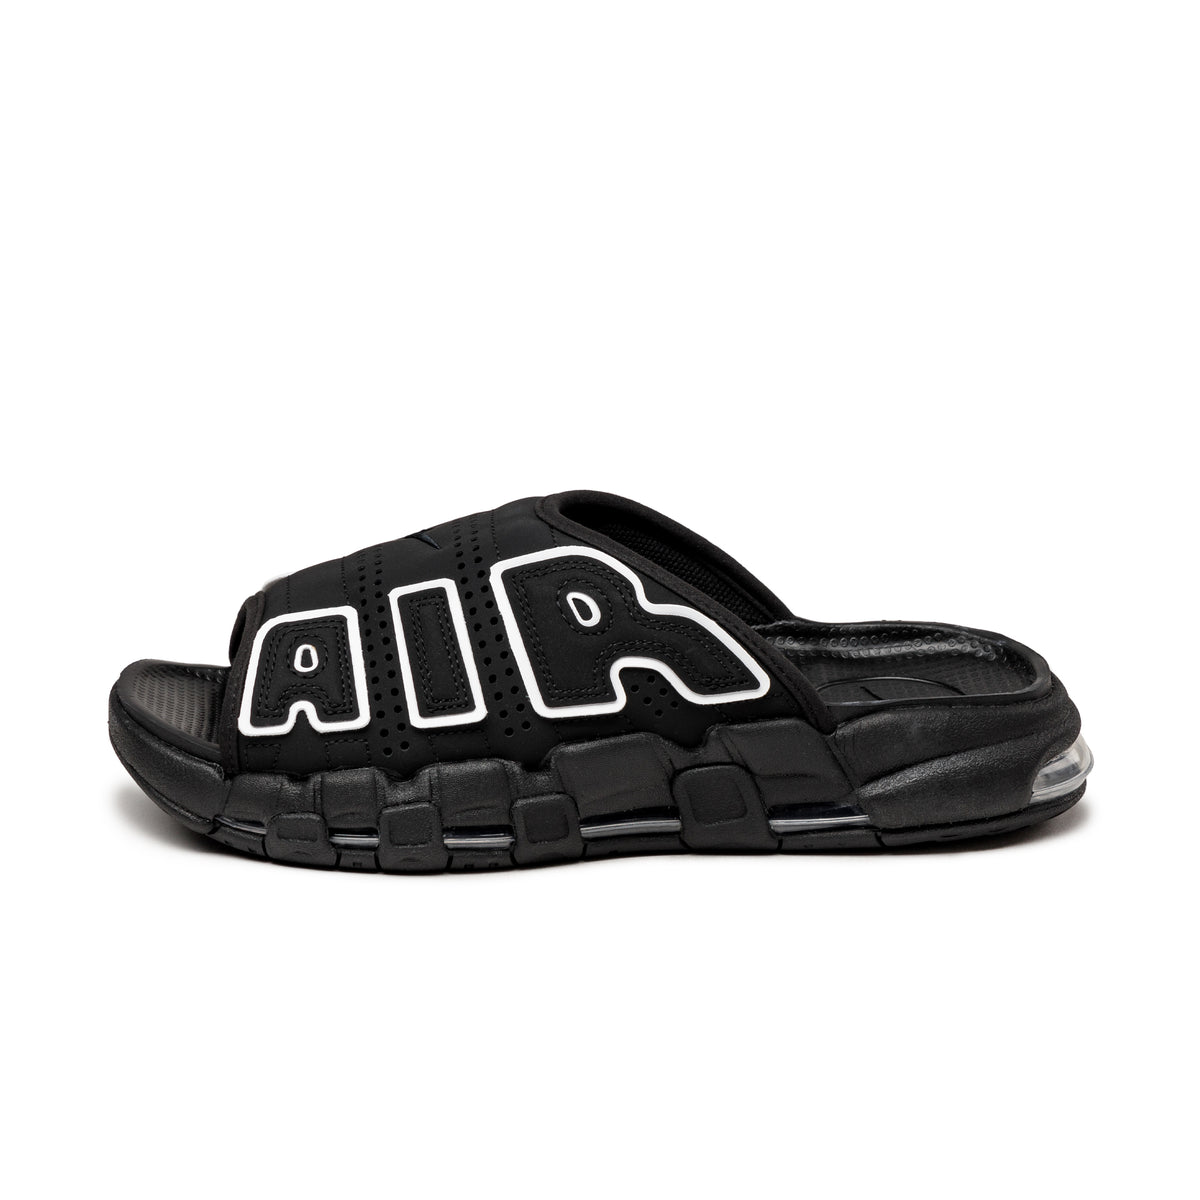 Nike Air More Uptempo Slide » Buy online now!